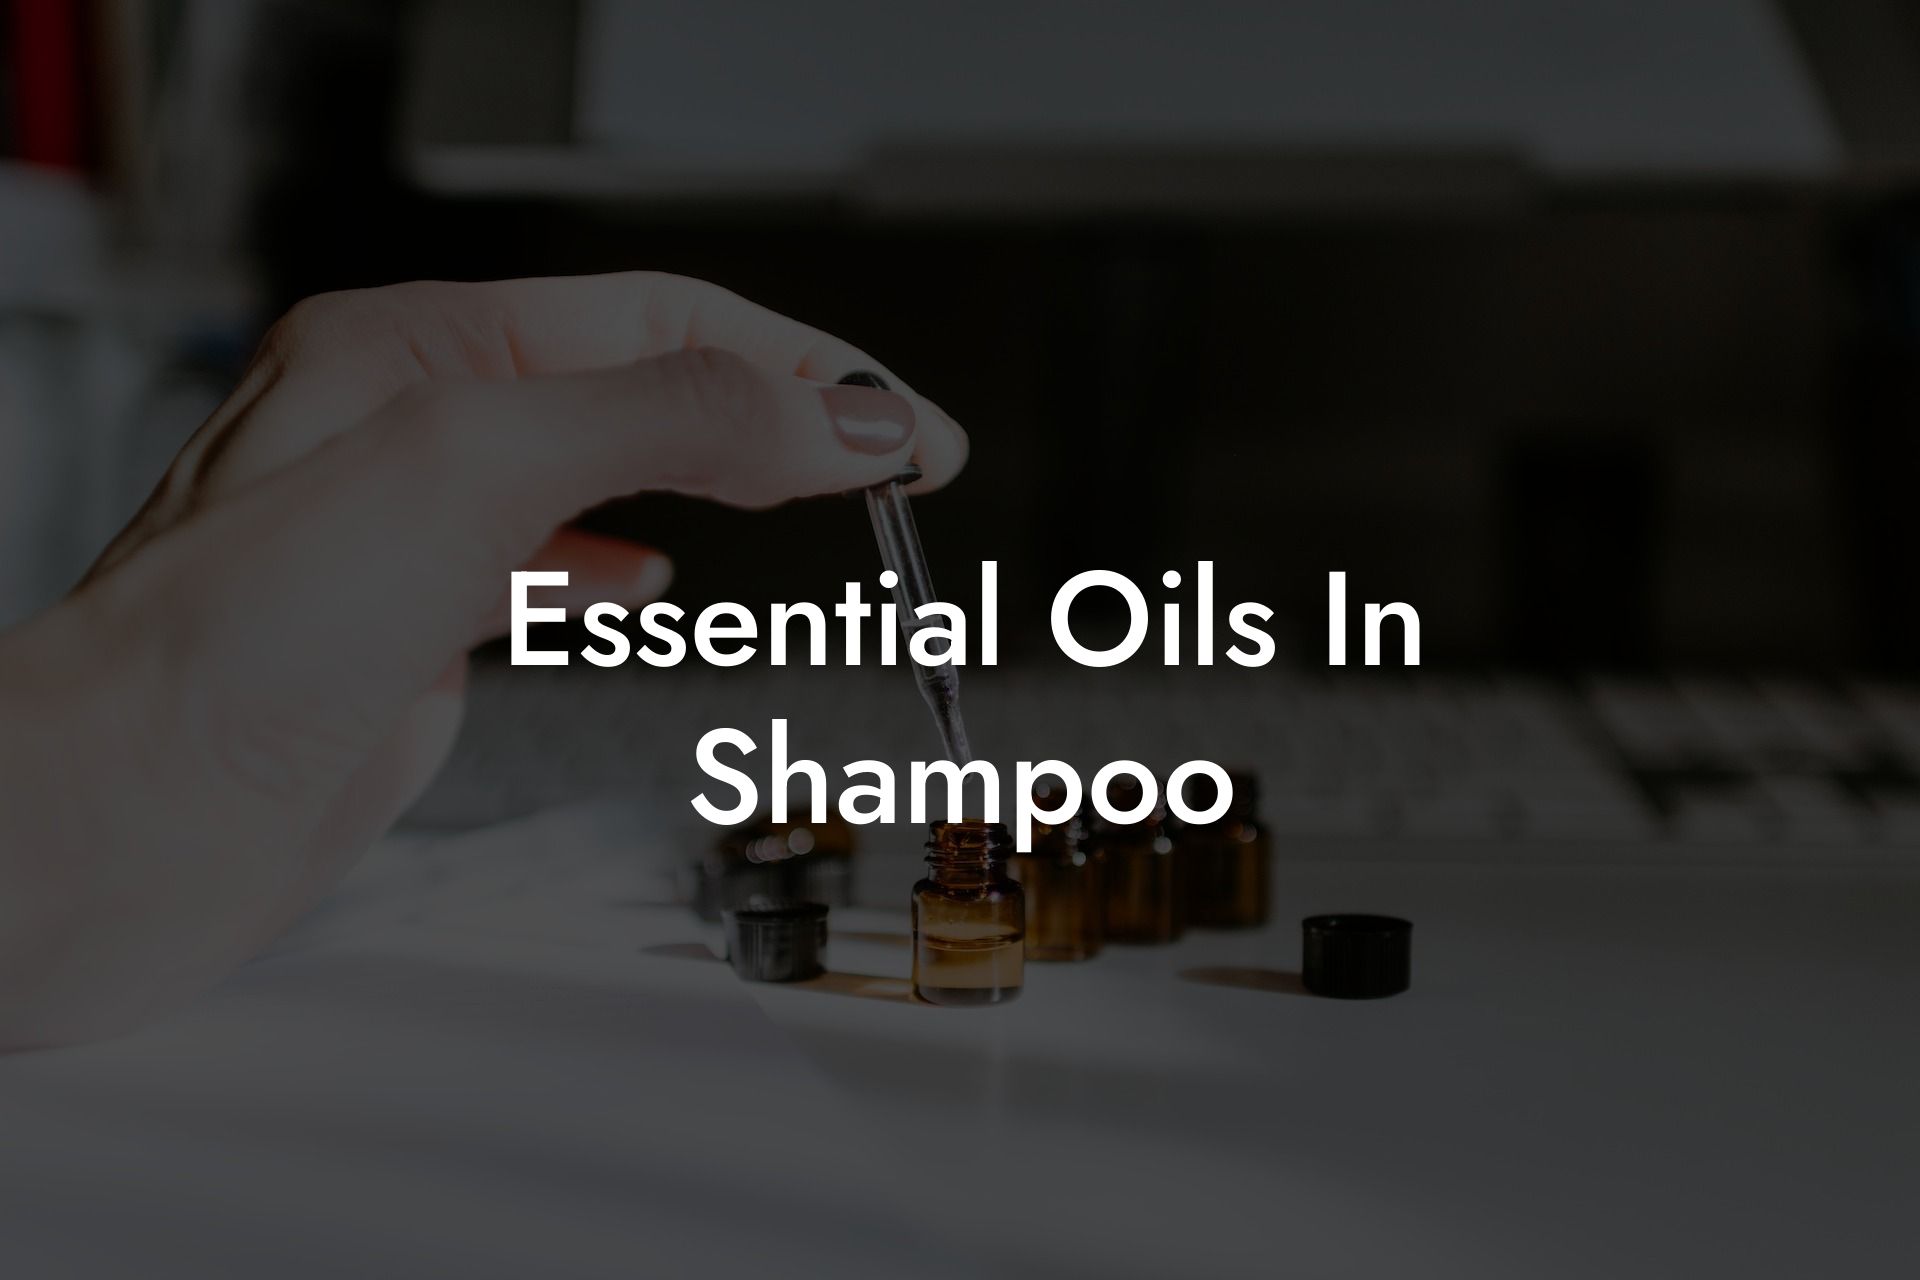 Essential Oils In Shampoo